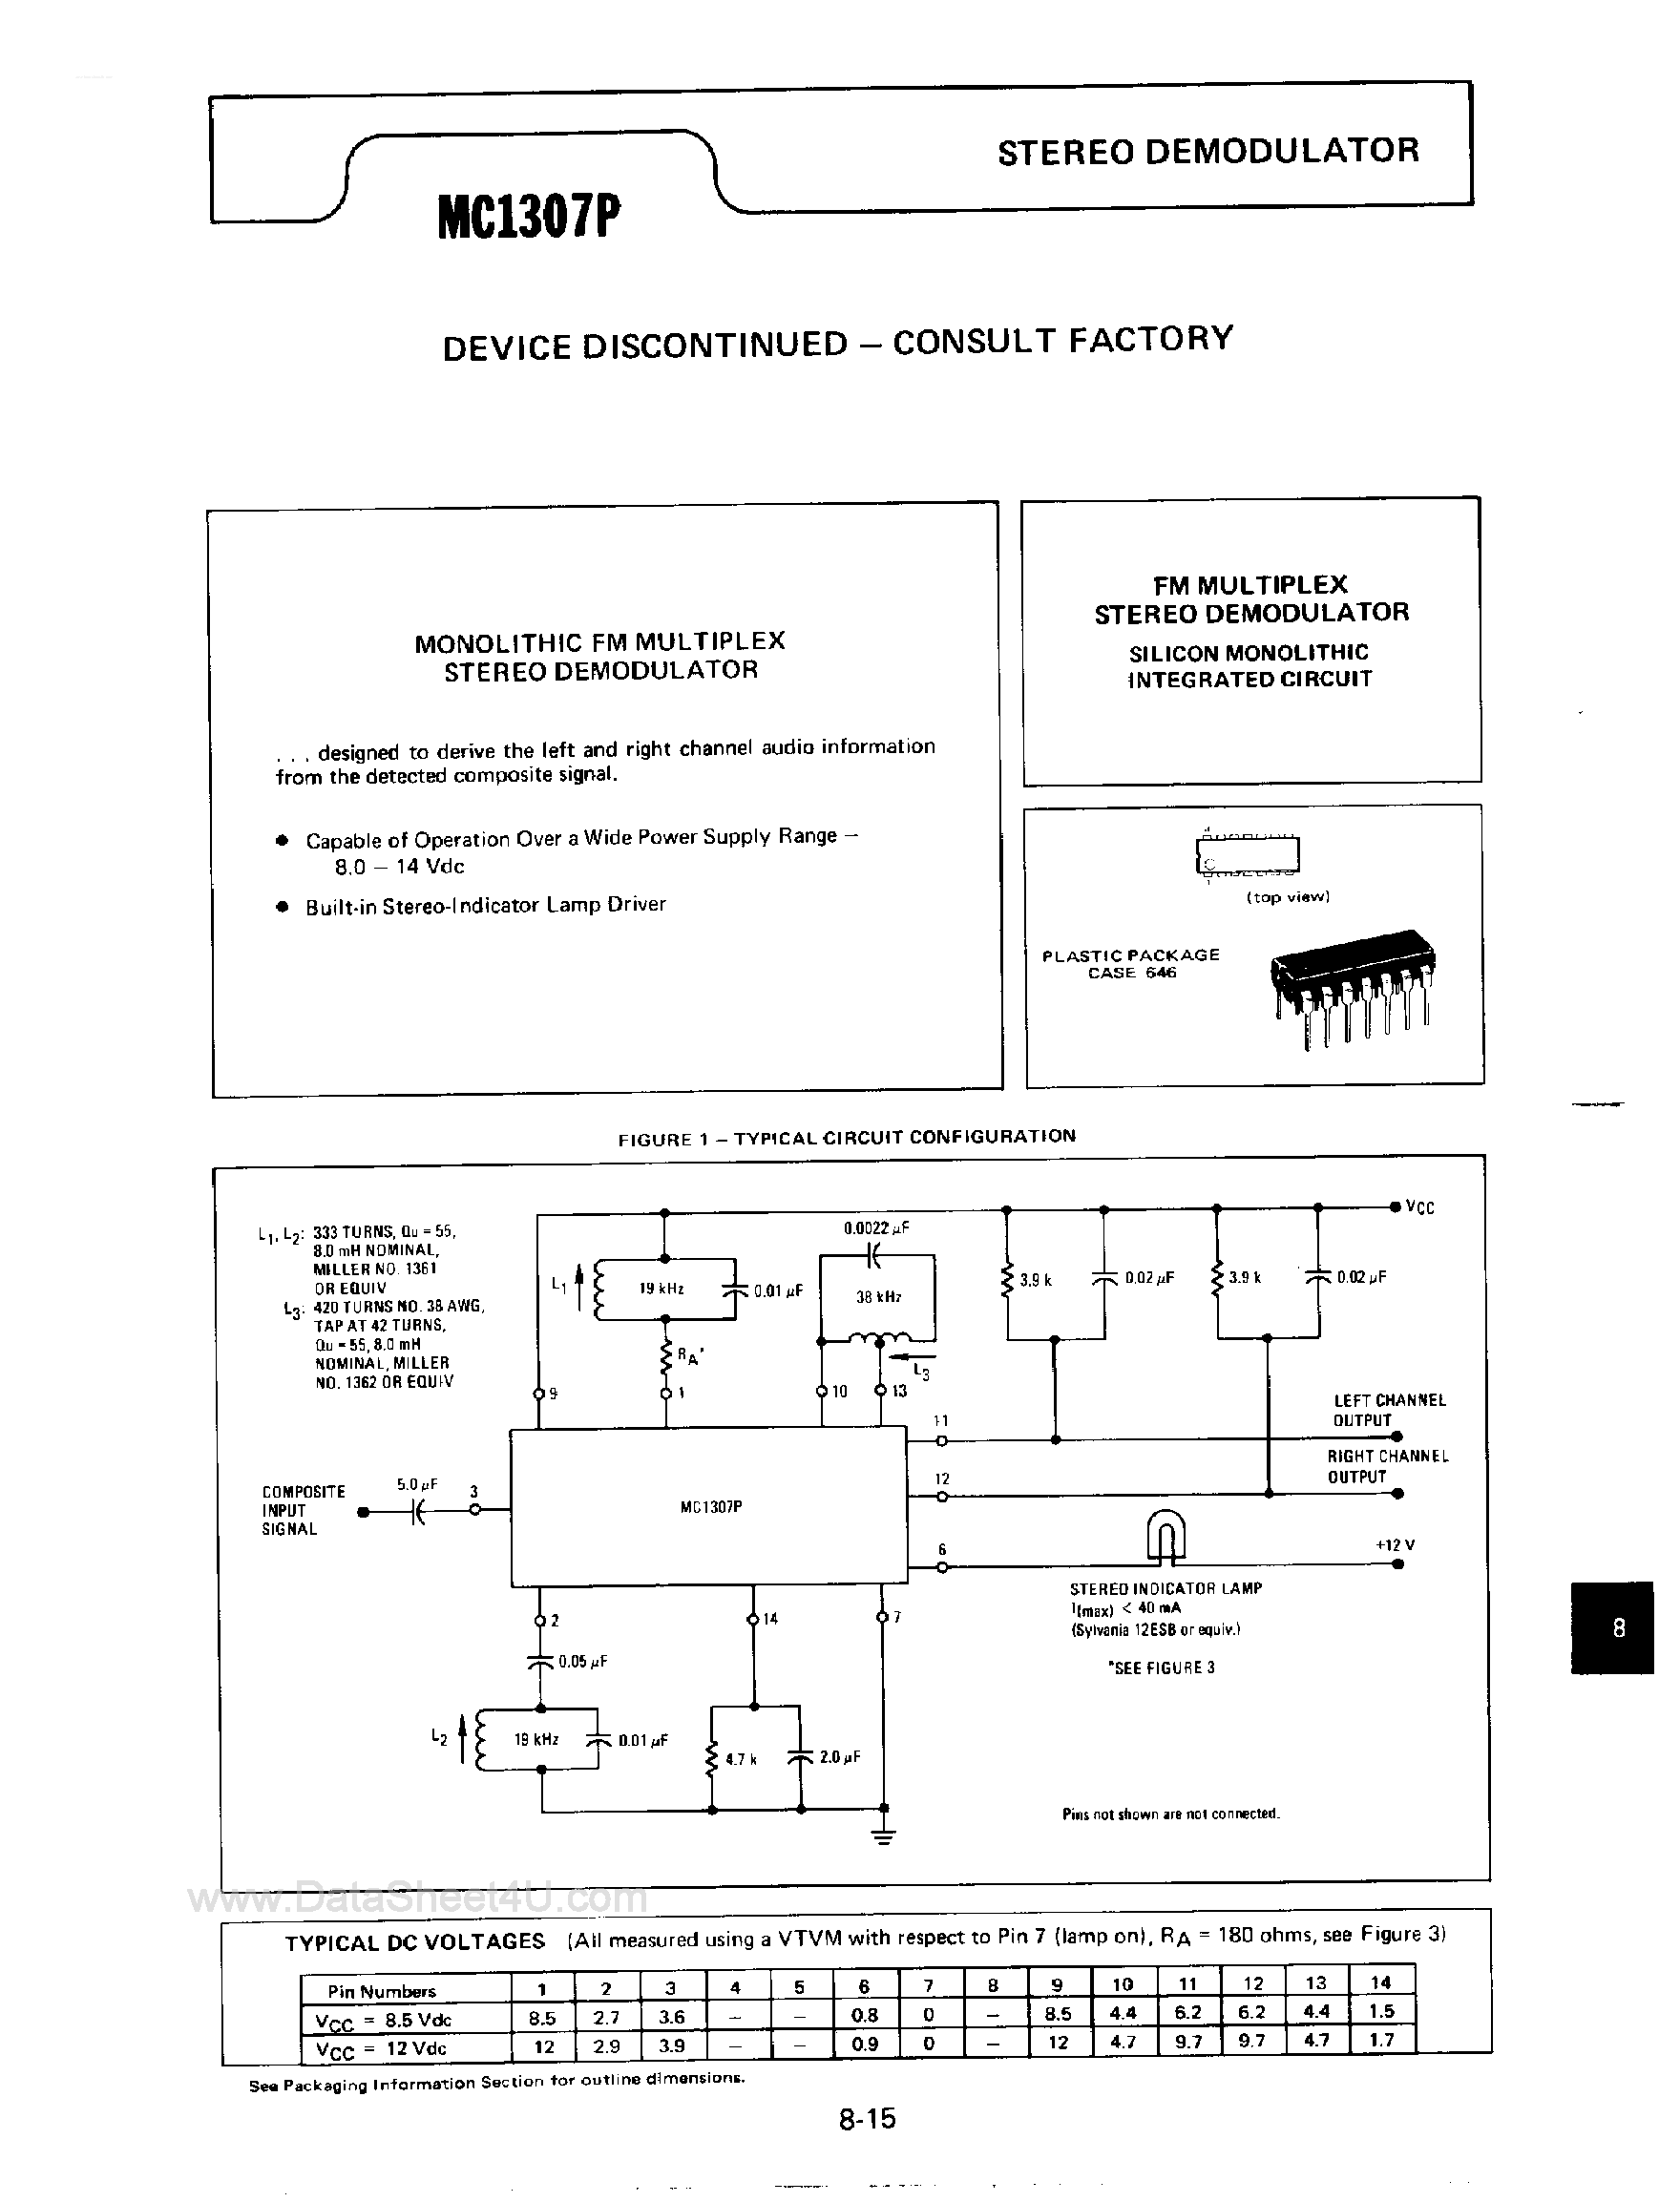 Datasheet MC1307P - Device Discontinued - Stereo Demodulator page 1